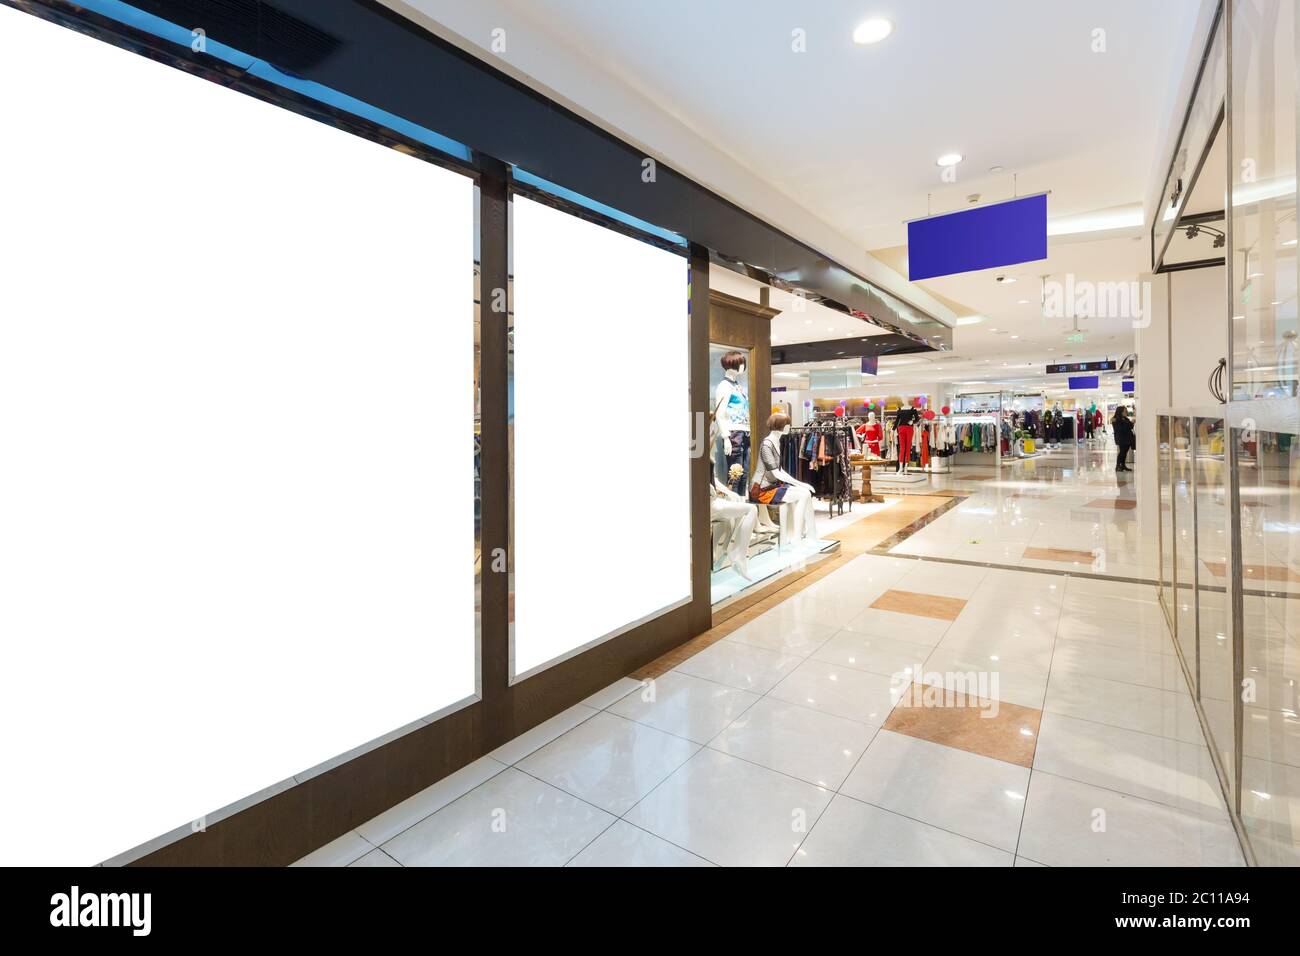 Leeren Flur mit riesigen Reklametafeln in Shopping Mall Stockfoto